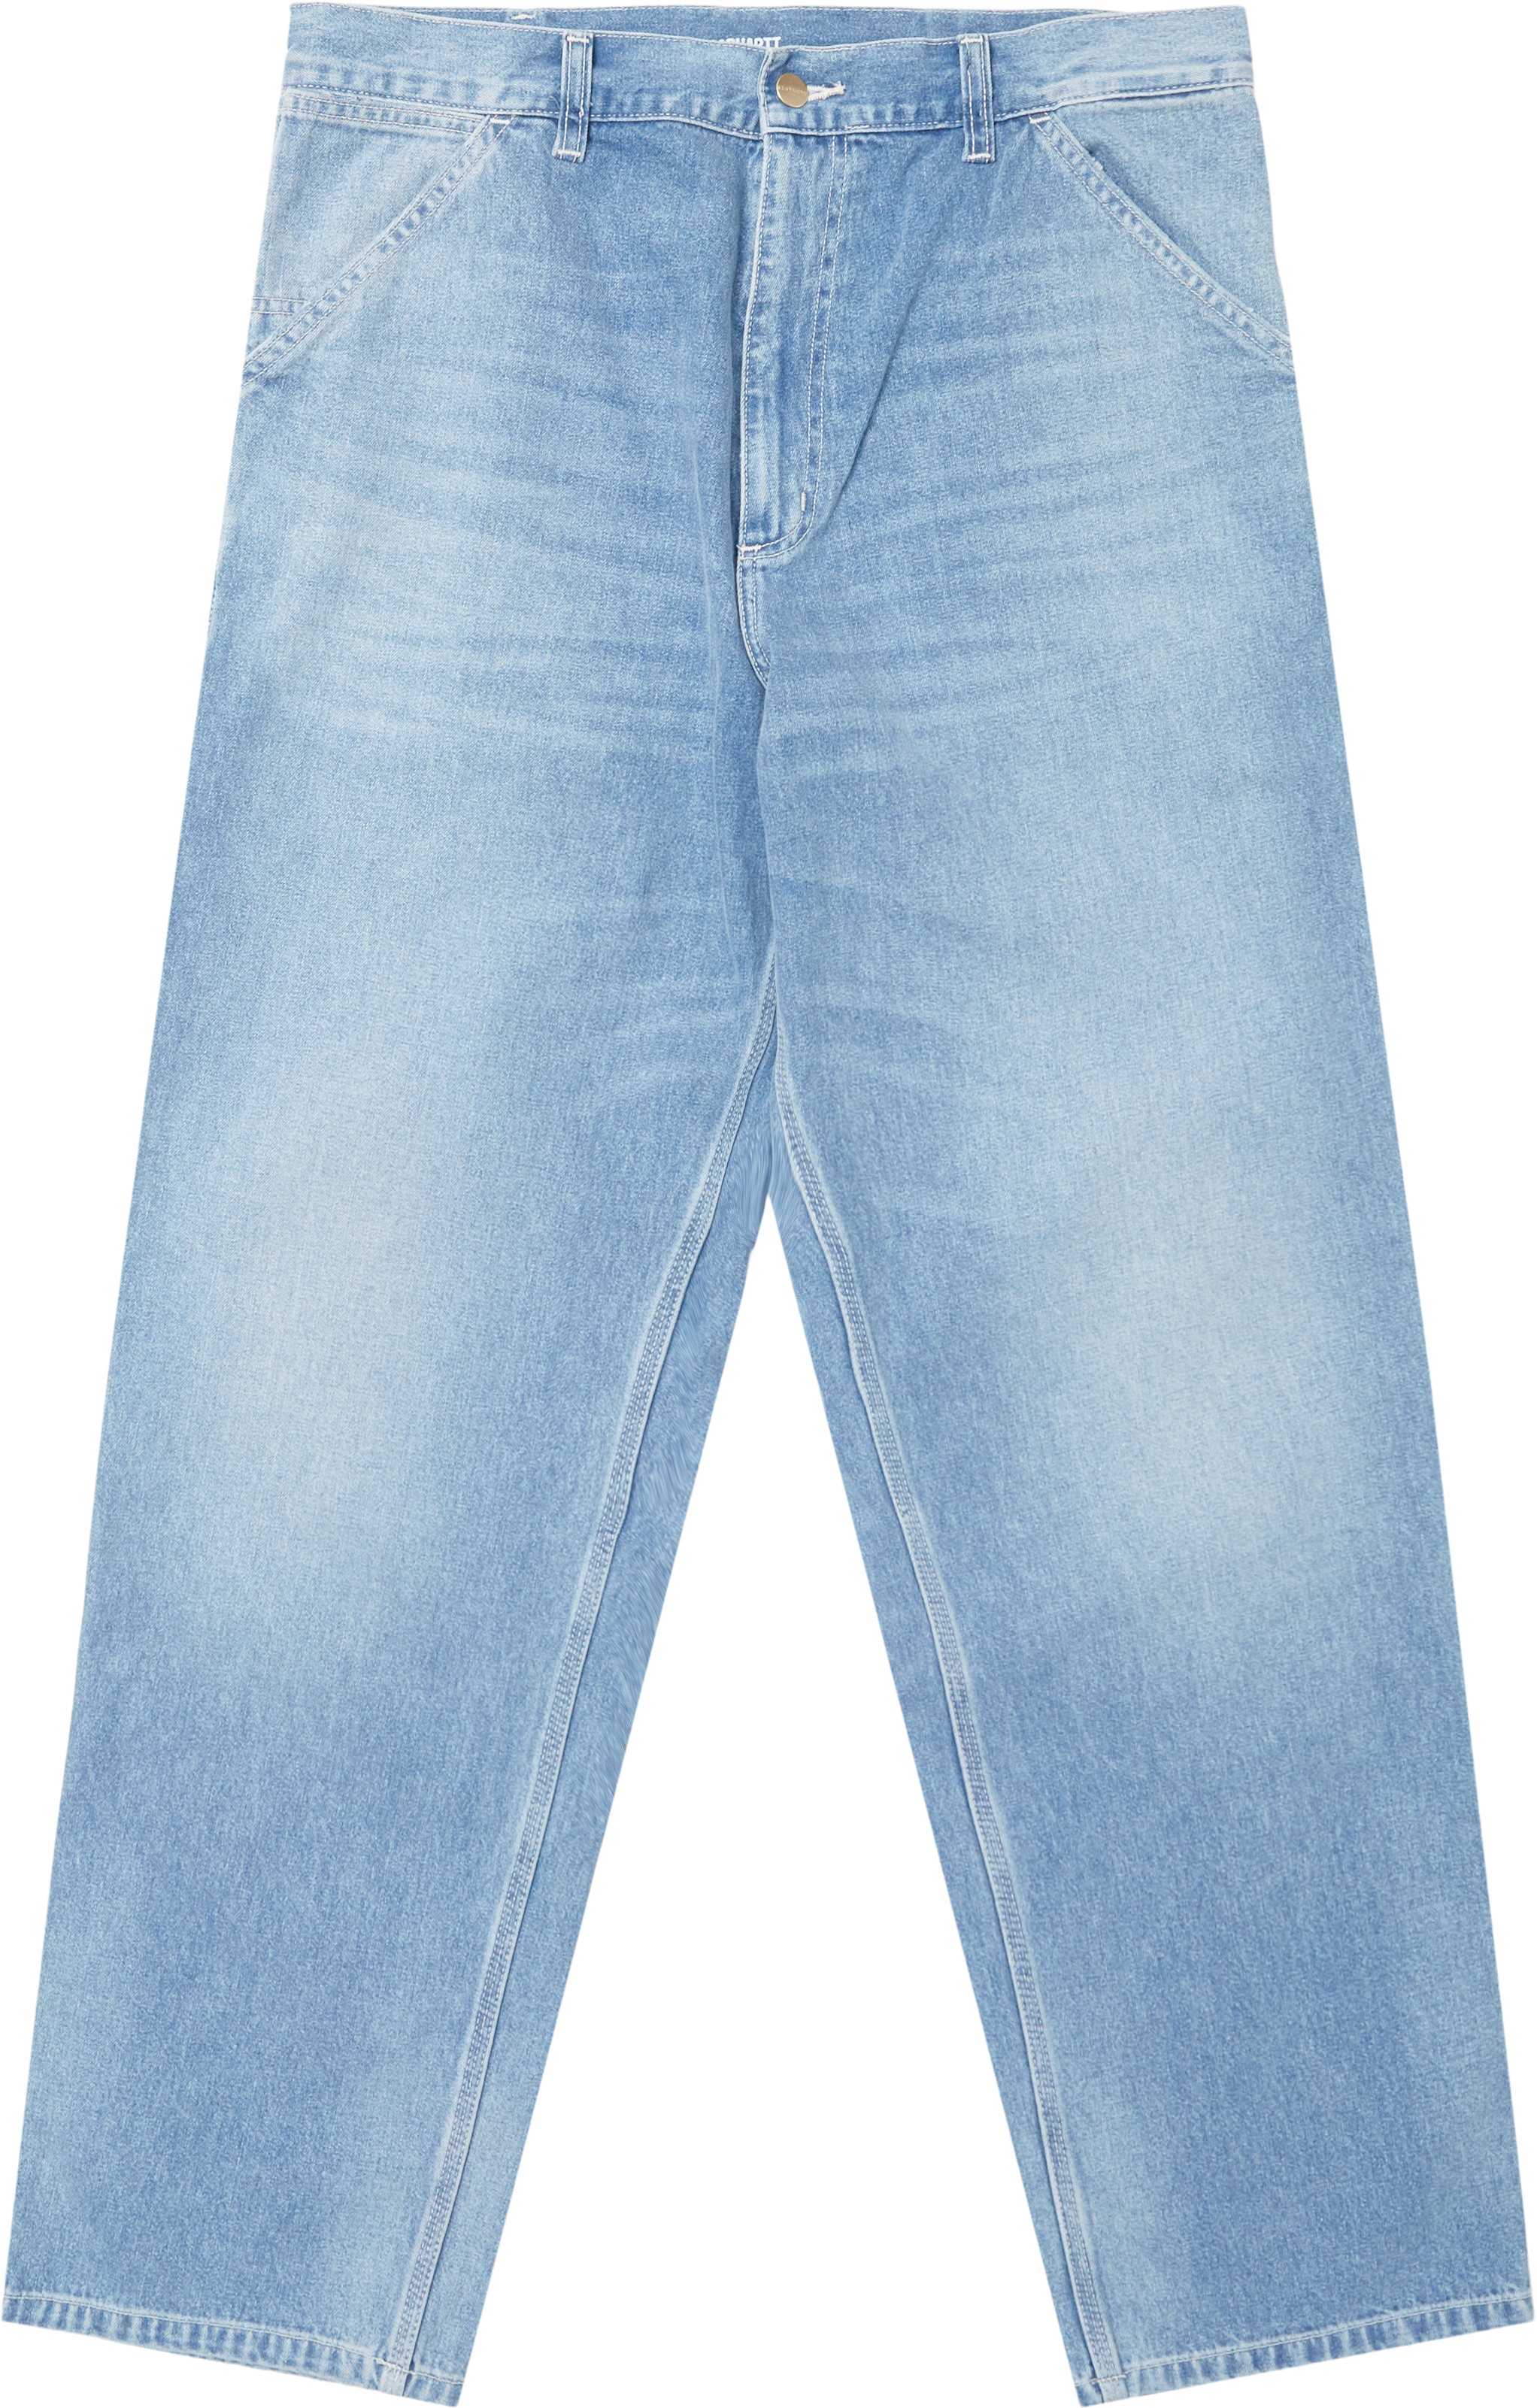 Simple Pant I022947 - Jeans - Straight fit - Denim